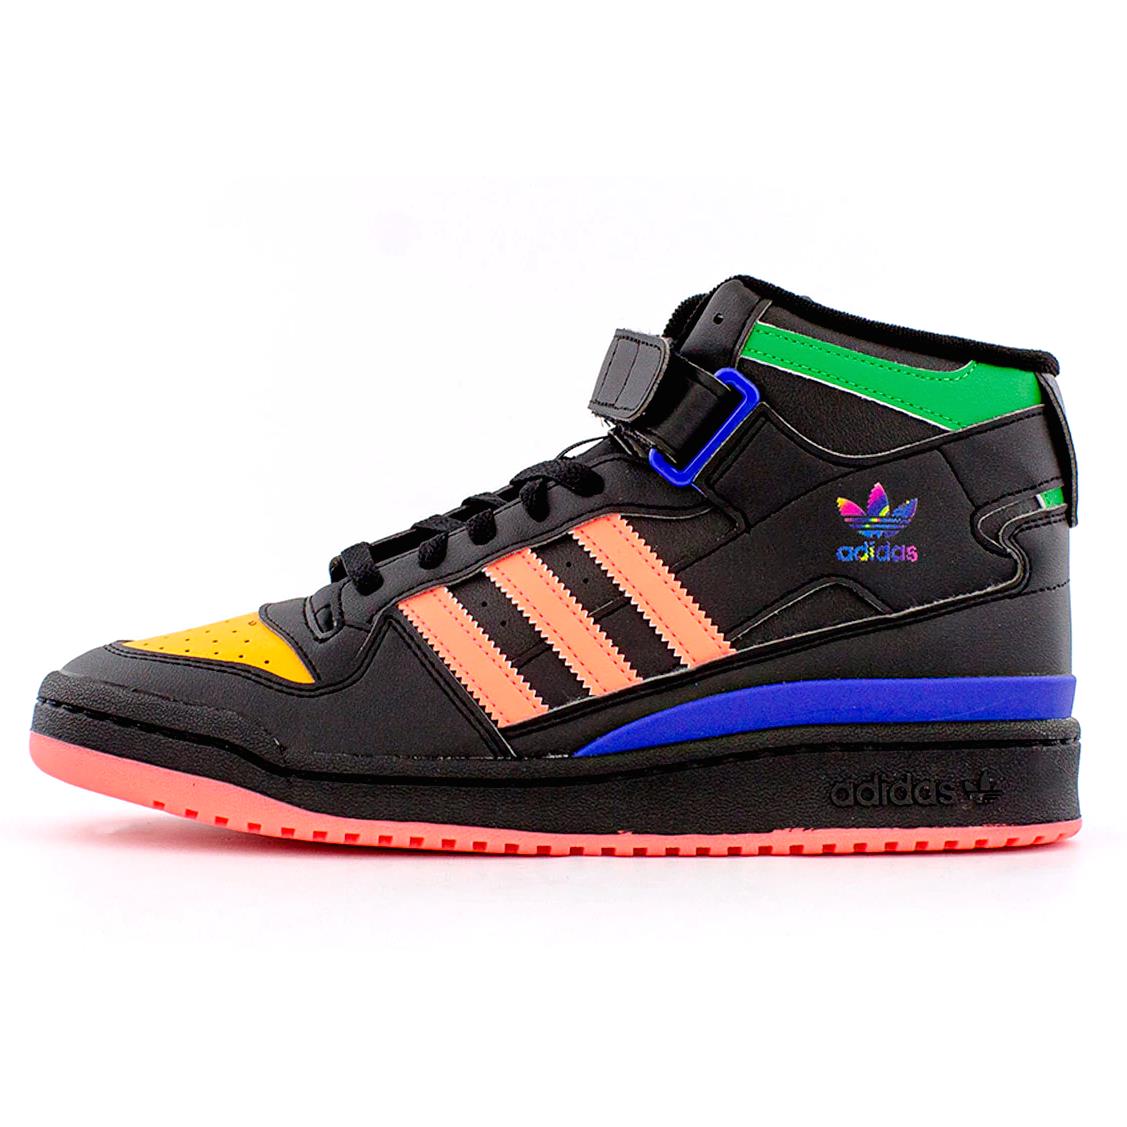 Mens Adidas Forum Mid Originals Black Multi Skateboard Basketball Fashion Shoes